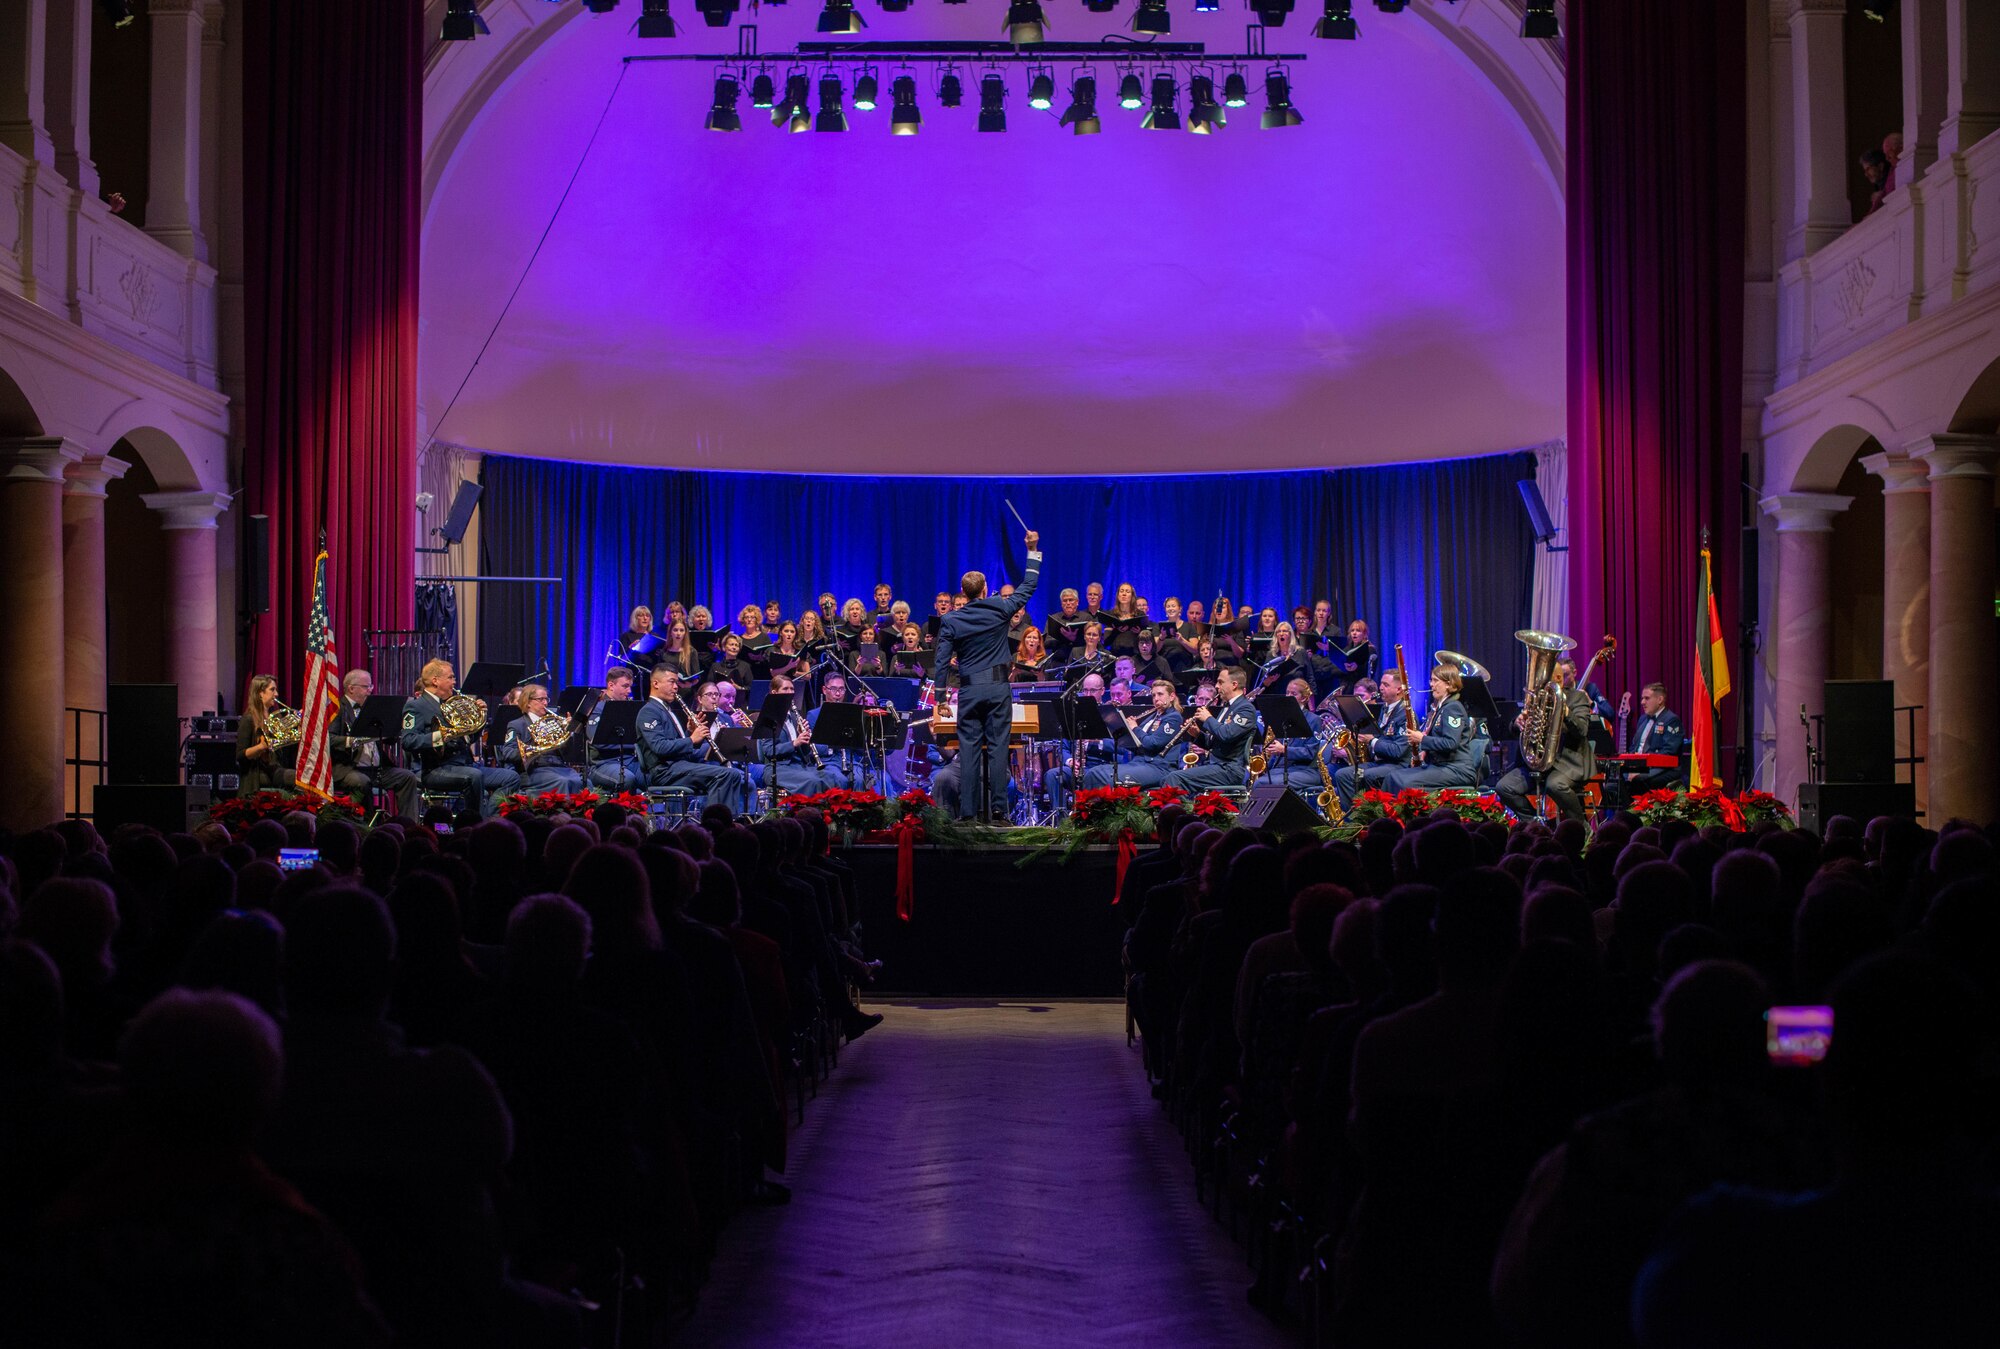 Band and choir perform at holiday concert